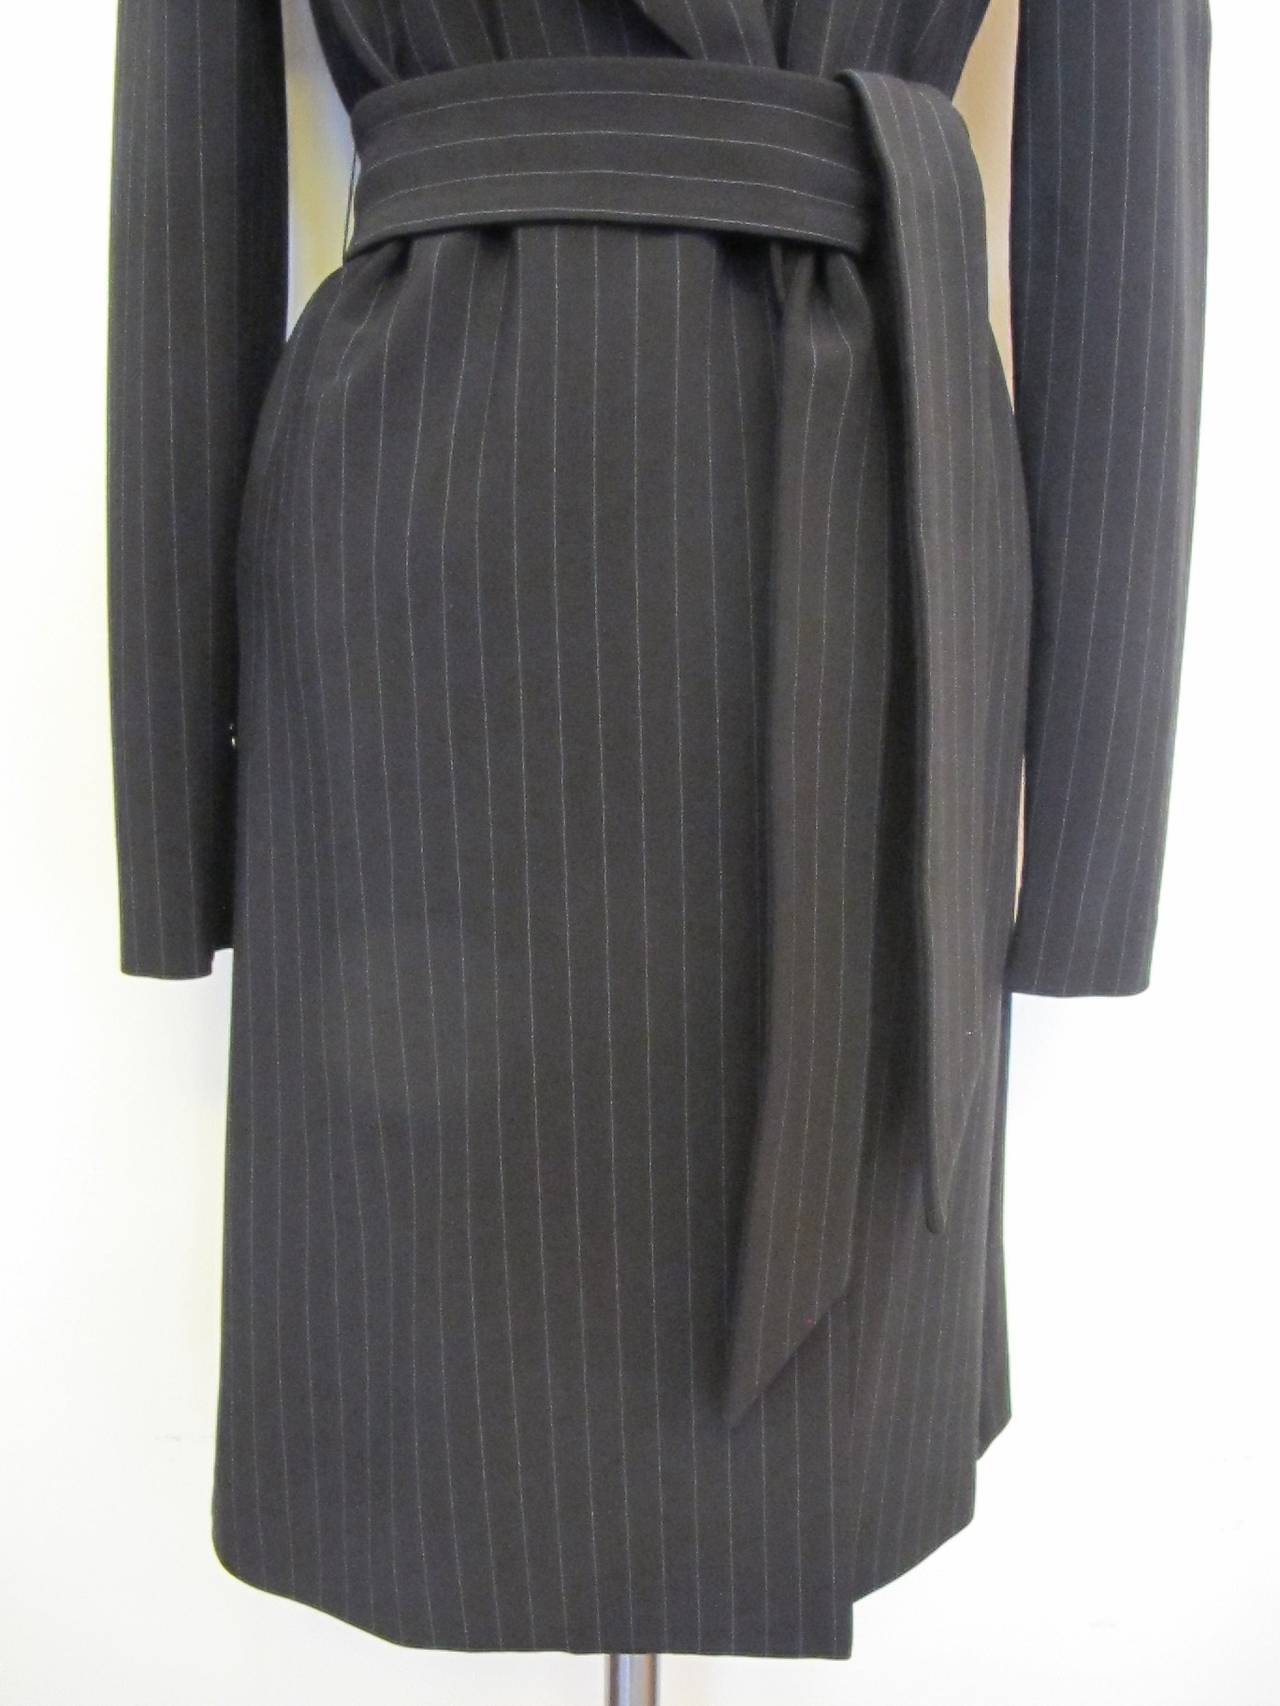 Asymmetrical Jean Paul Gaultier Pinstripe Dress In New Condition For Sale In San Francisco, CA